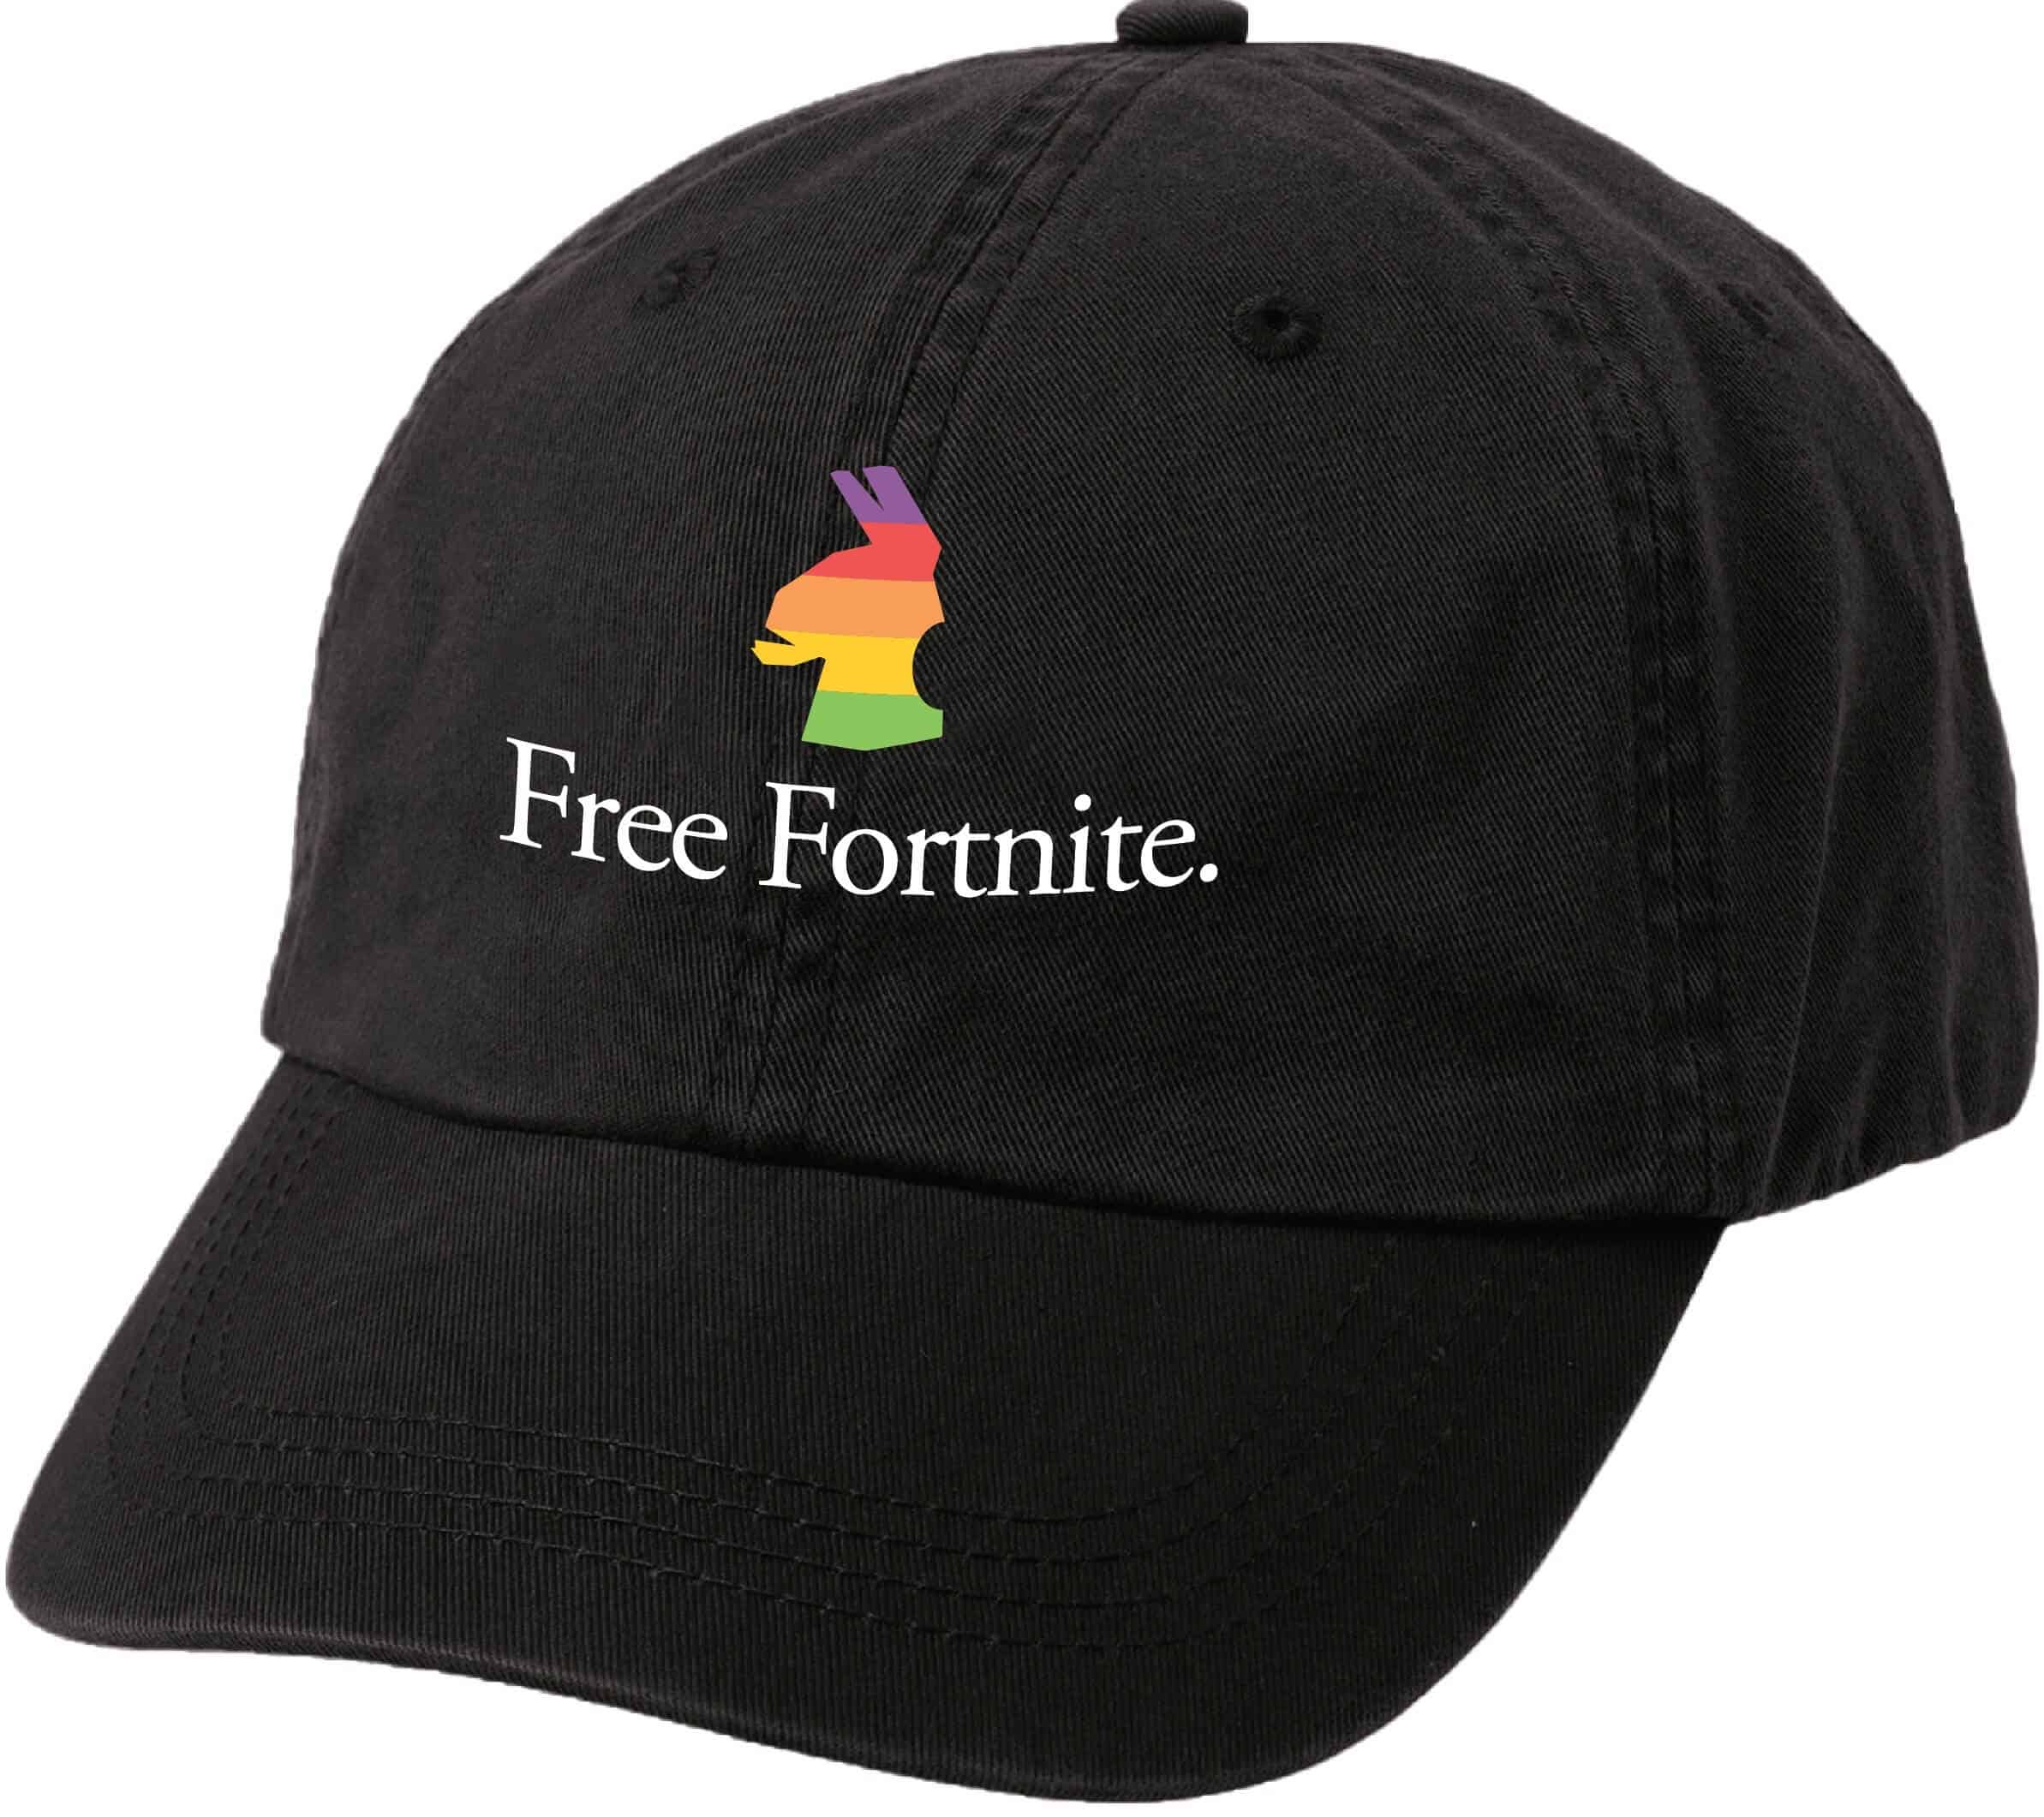 Free fortnite hat